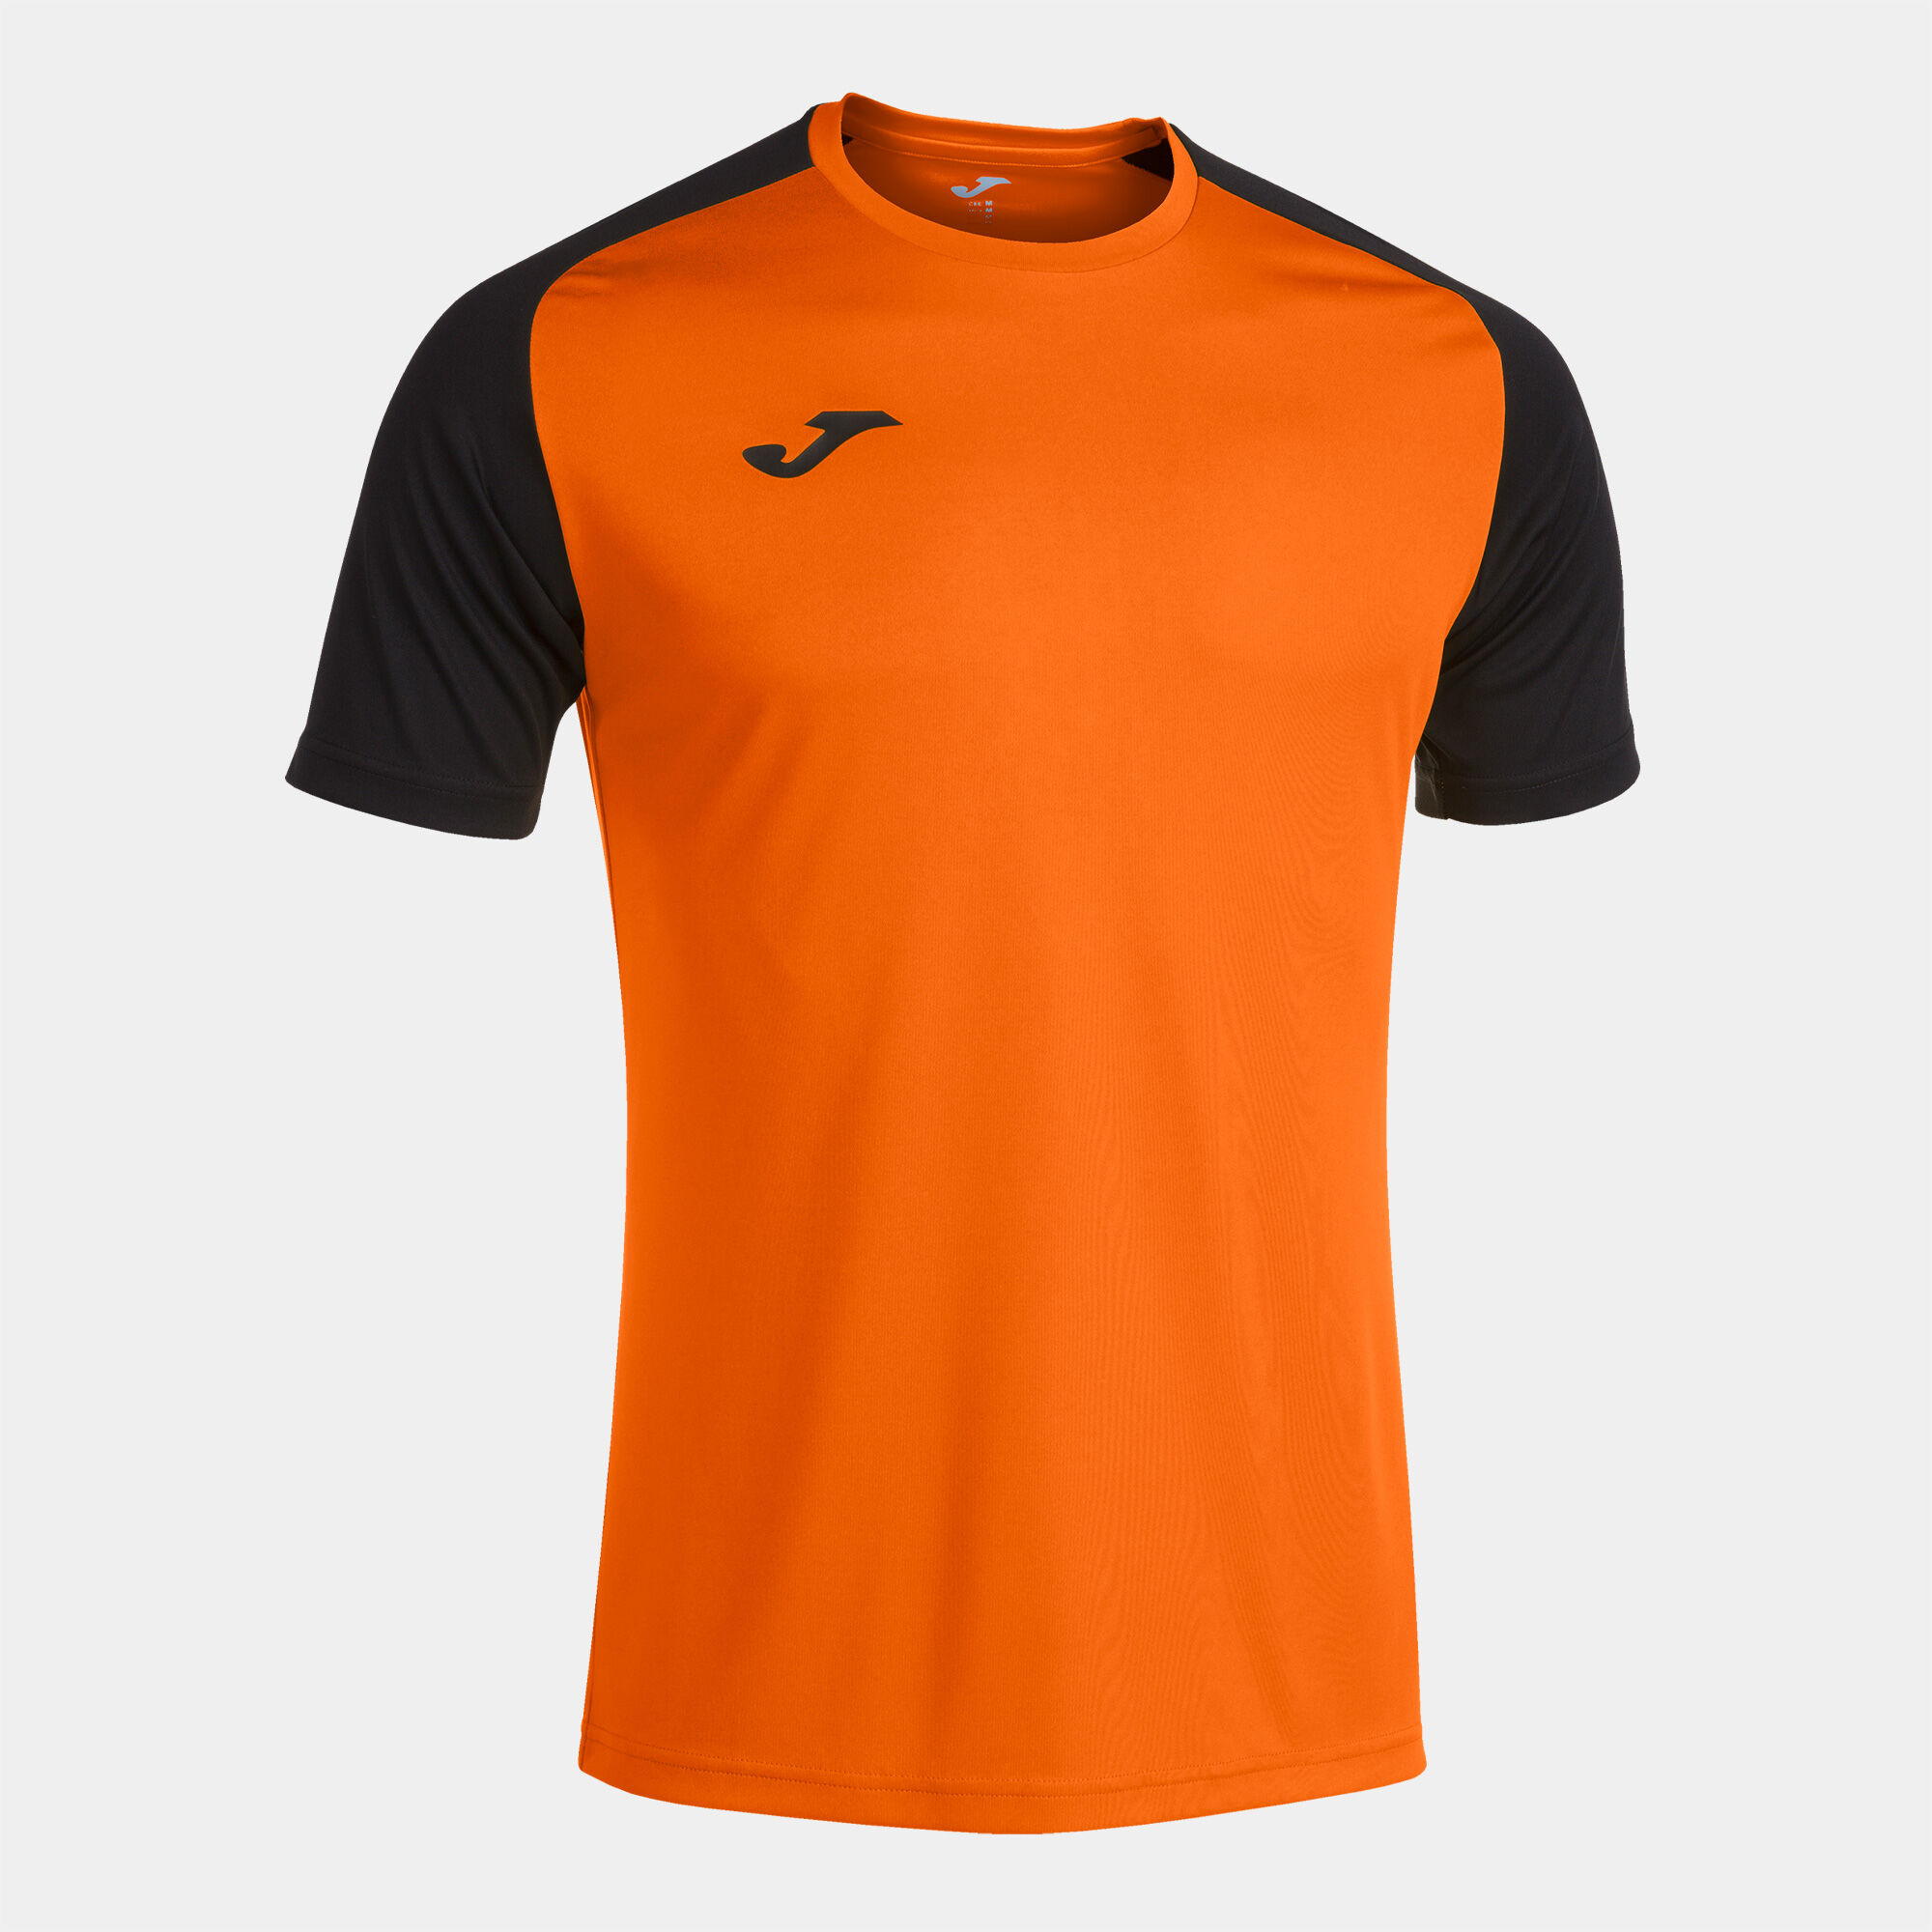 Shirt short sleeve man Academy IV orange black